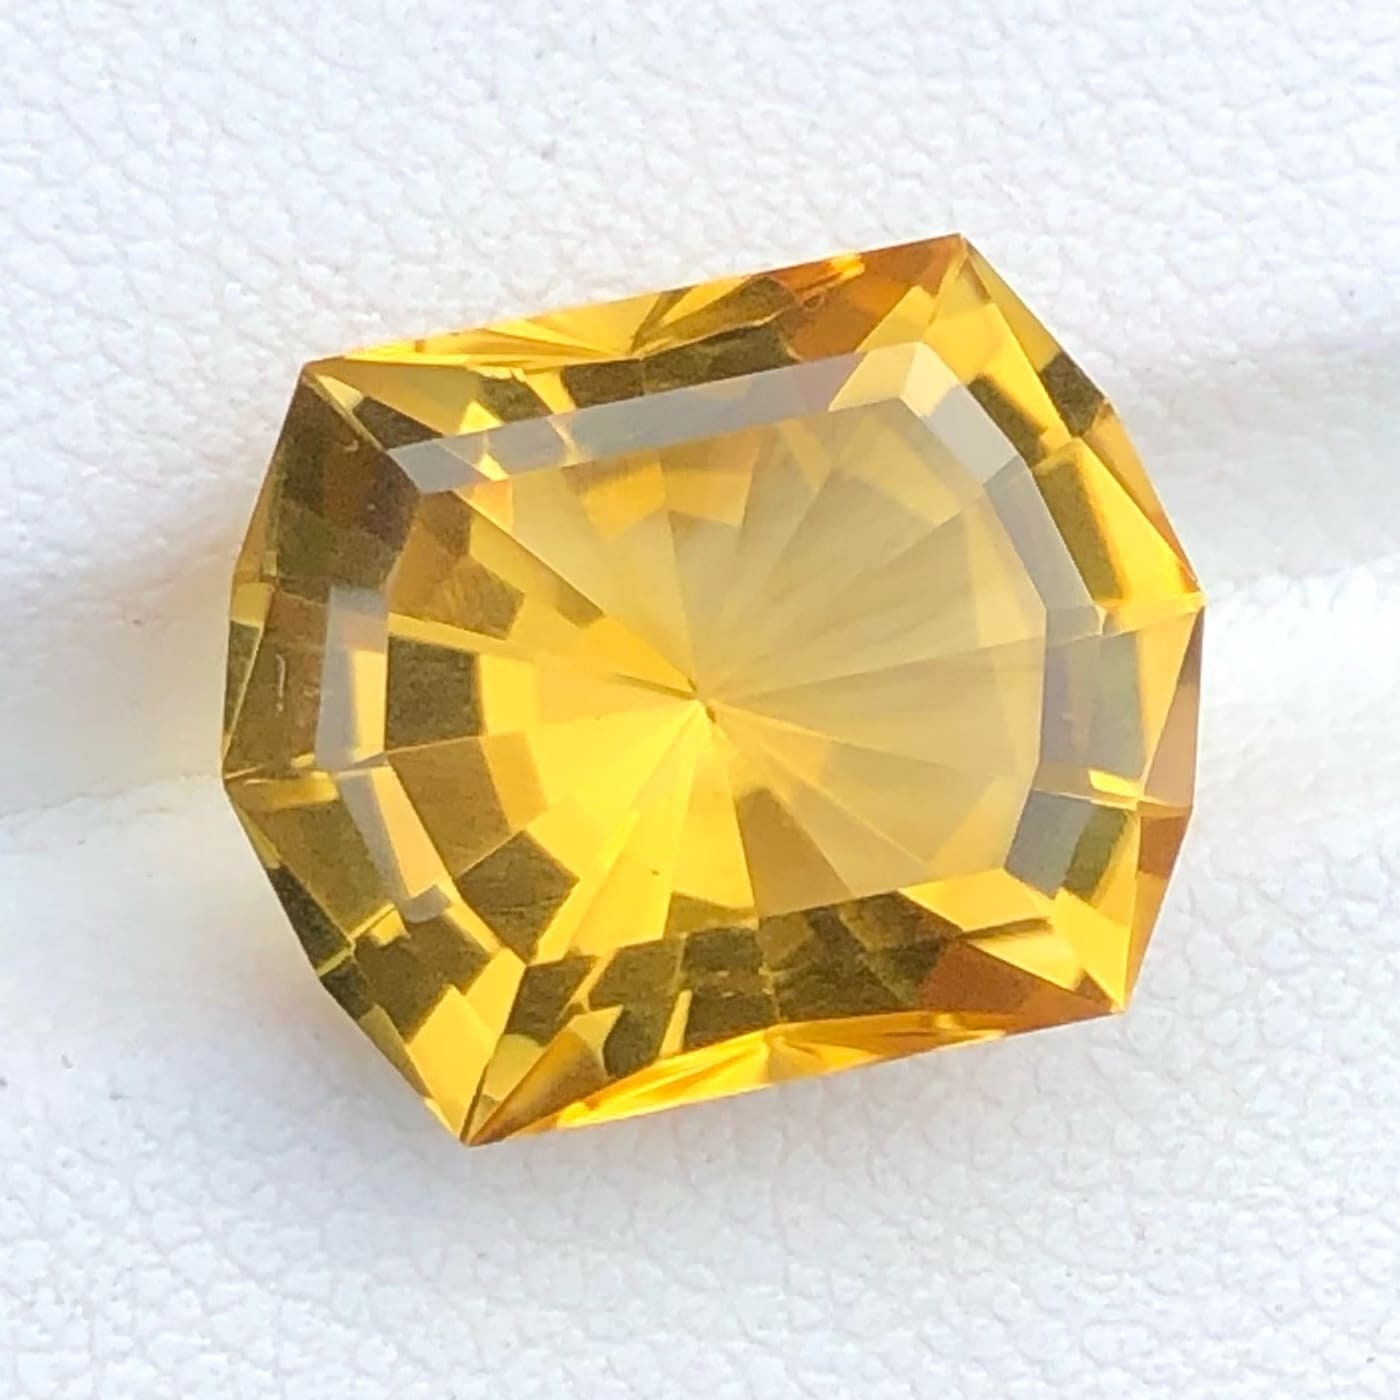 Fancy Cut Loose Gemstone for Jewelry Loupe Clean 3.70cts Natural Yellowish Orange Citrine Yellowish Orange Citrine 10.3 x 9.9 x 7.2 MM